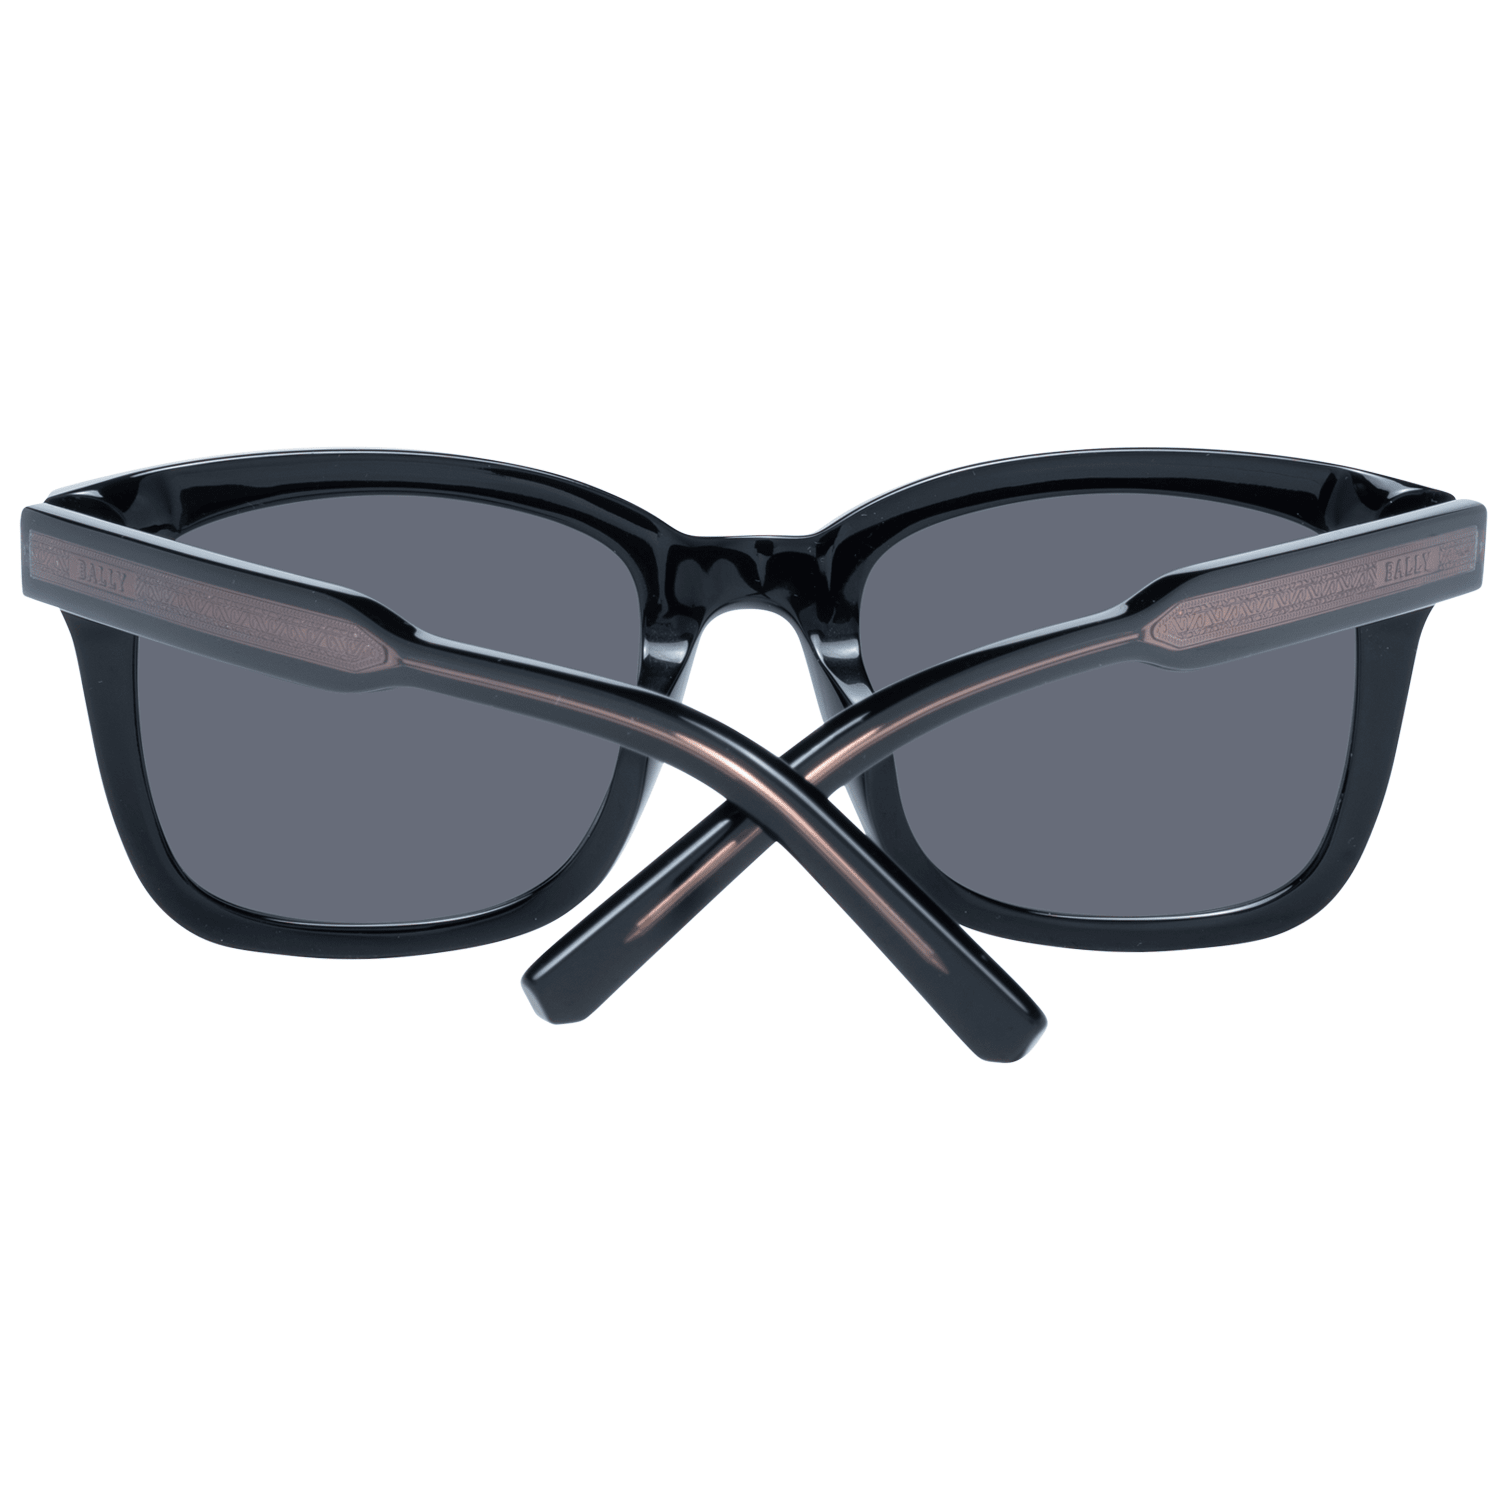 BALLY BLACK UNISEX Sunglasses for Unisex £136.00 - PicClick UK